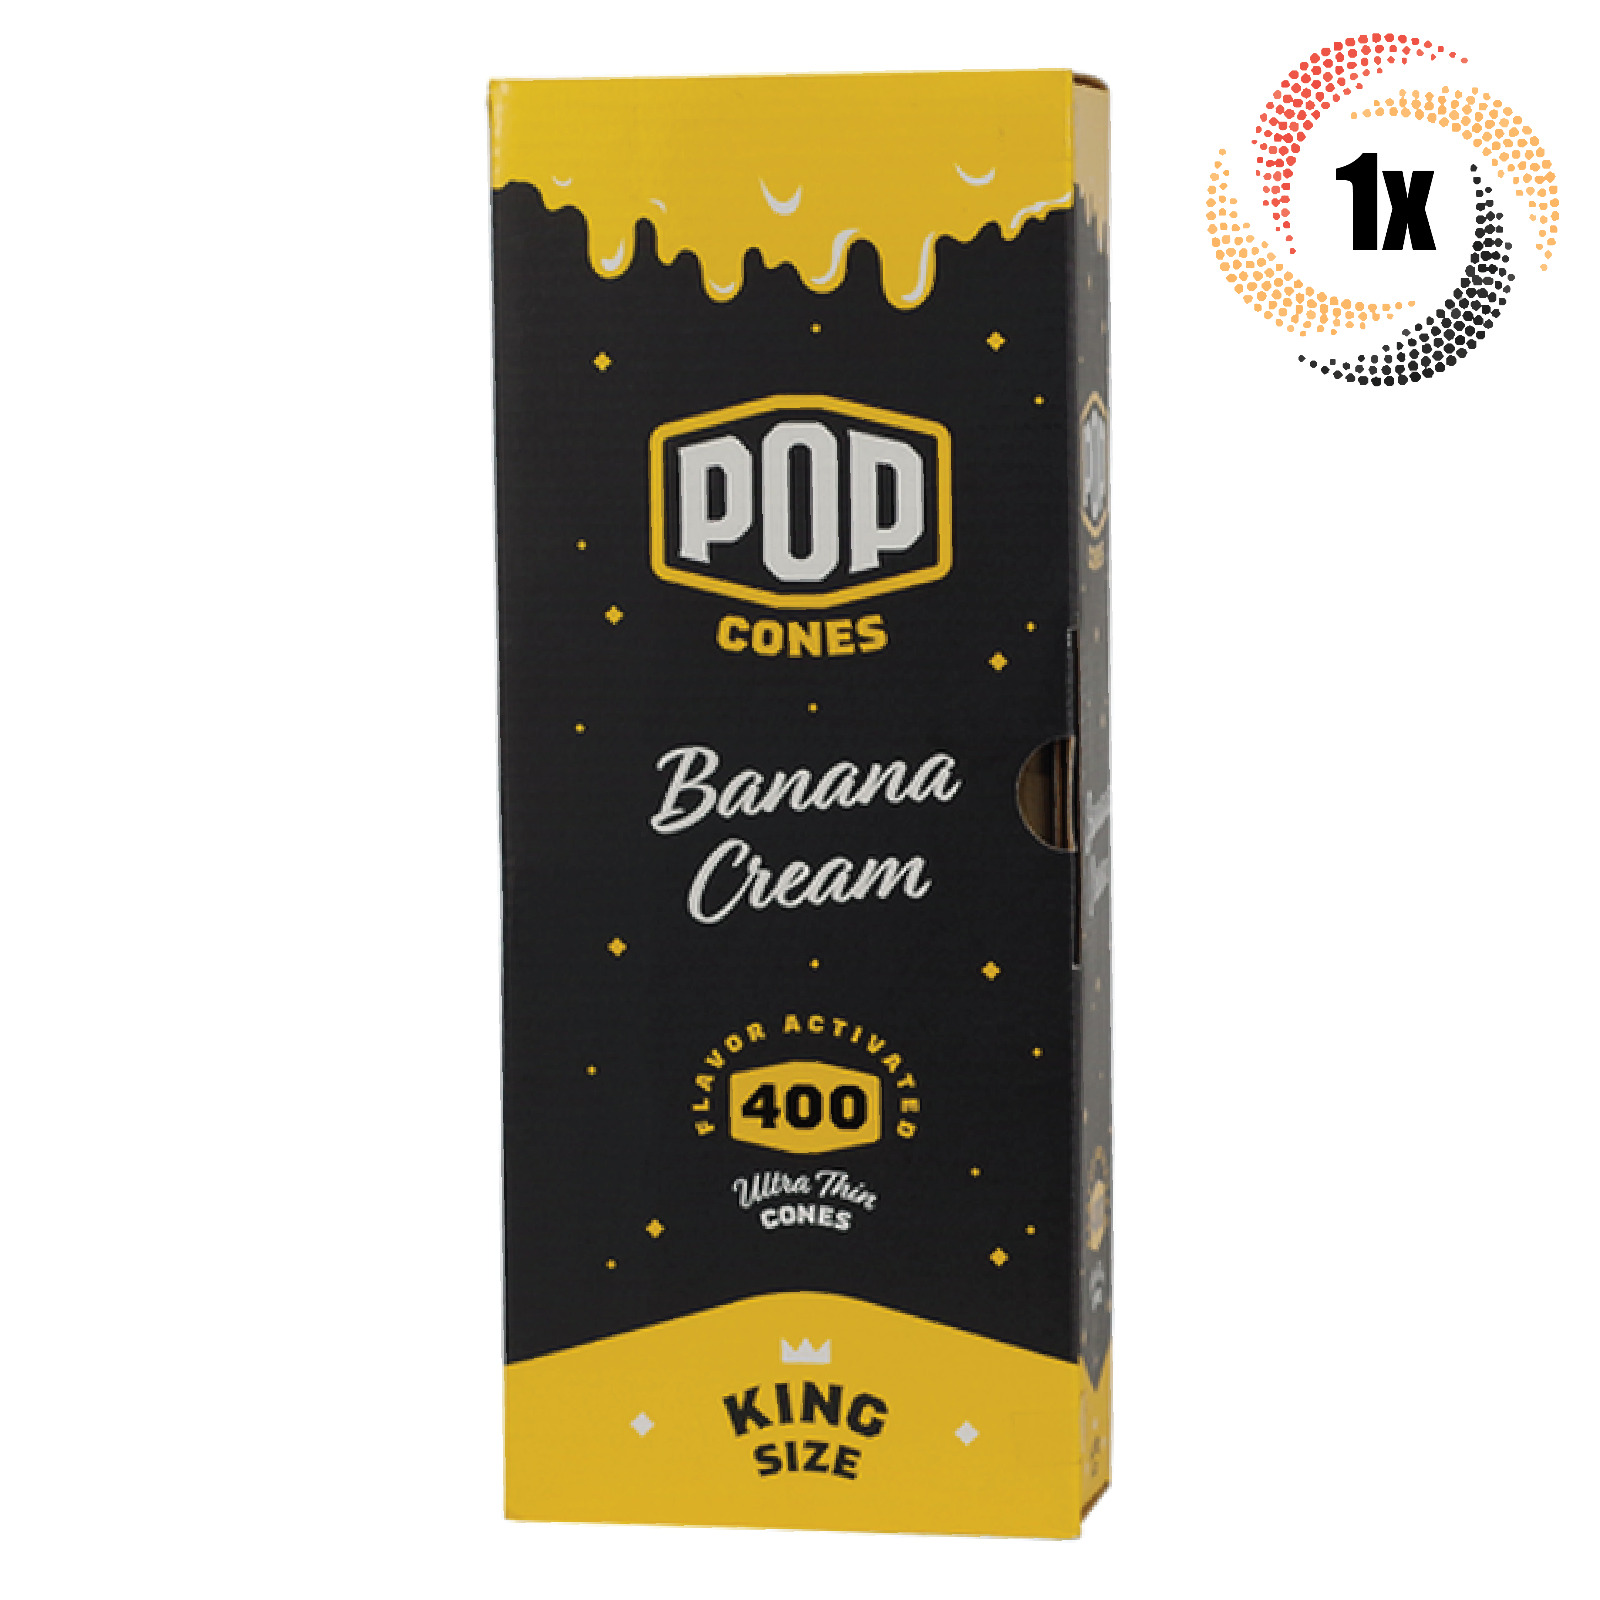 1x Box Pop Banana Cream Cones | 400 Cones Each | King Size | + 2 Free Tubes